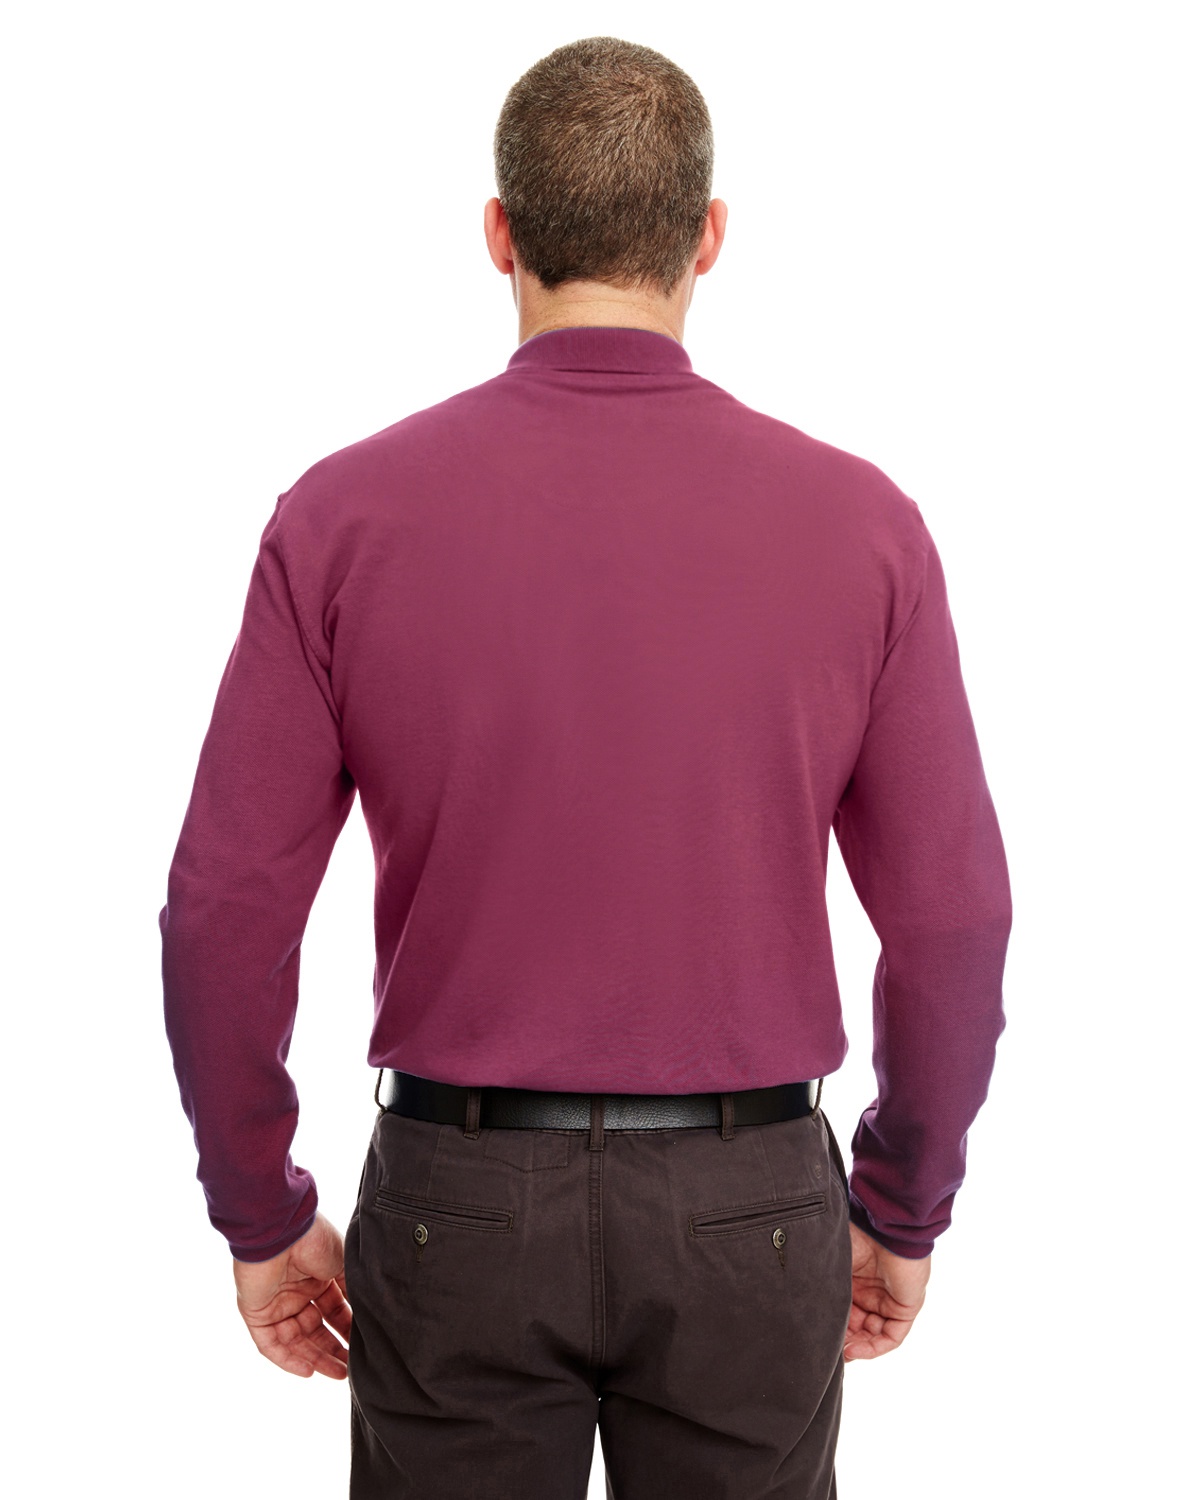 'UltraClub 8532 Adult Long Sleeve Classic Pique Polo Shirt'